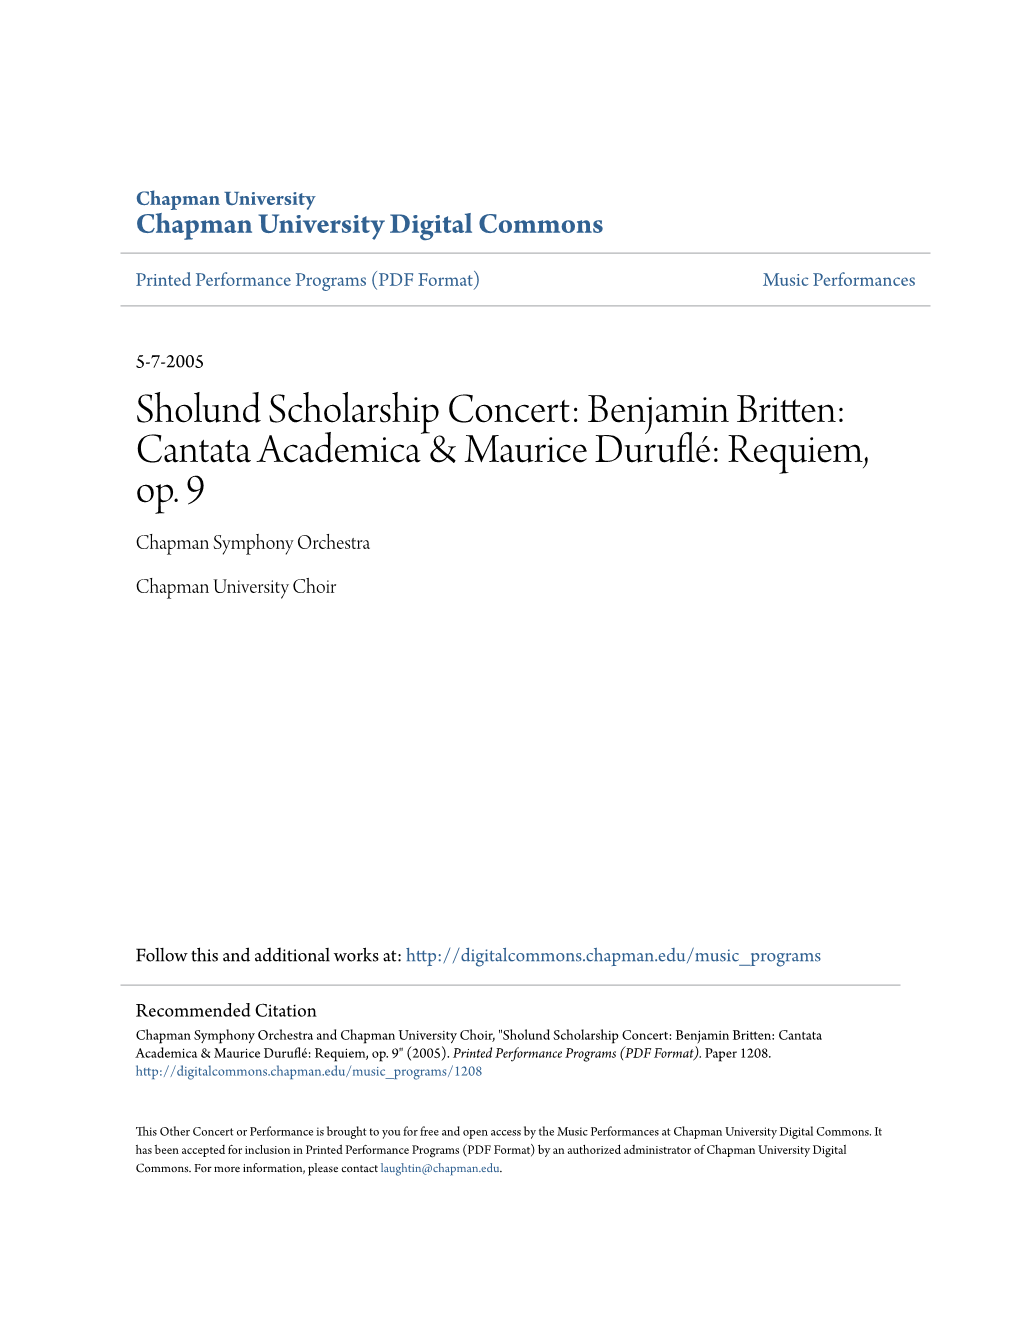 Cantata Academica & Maurice Duruflé: Requiem, Op. 9